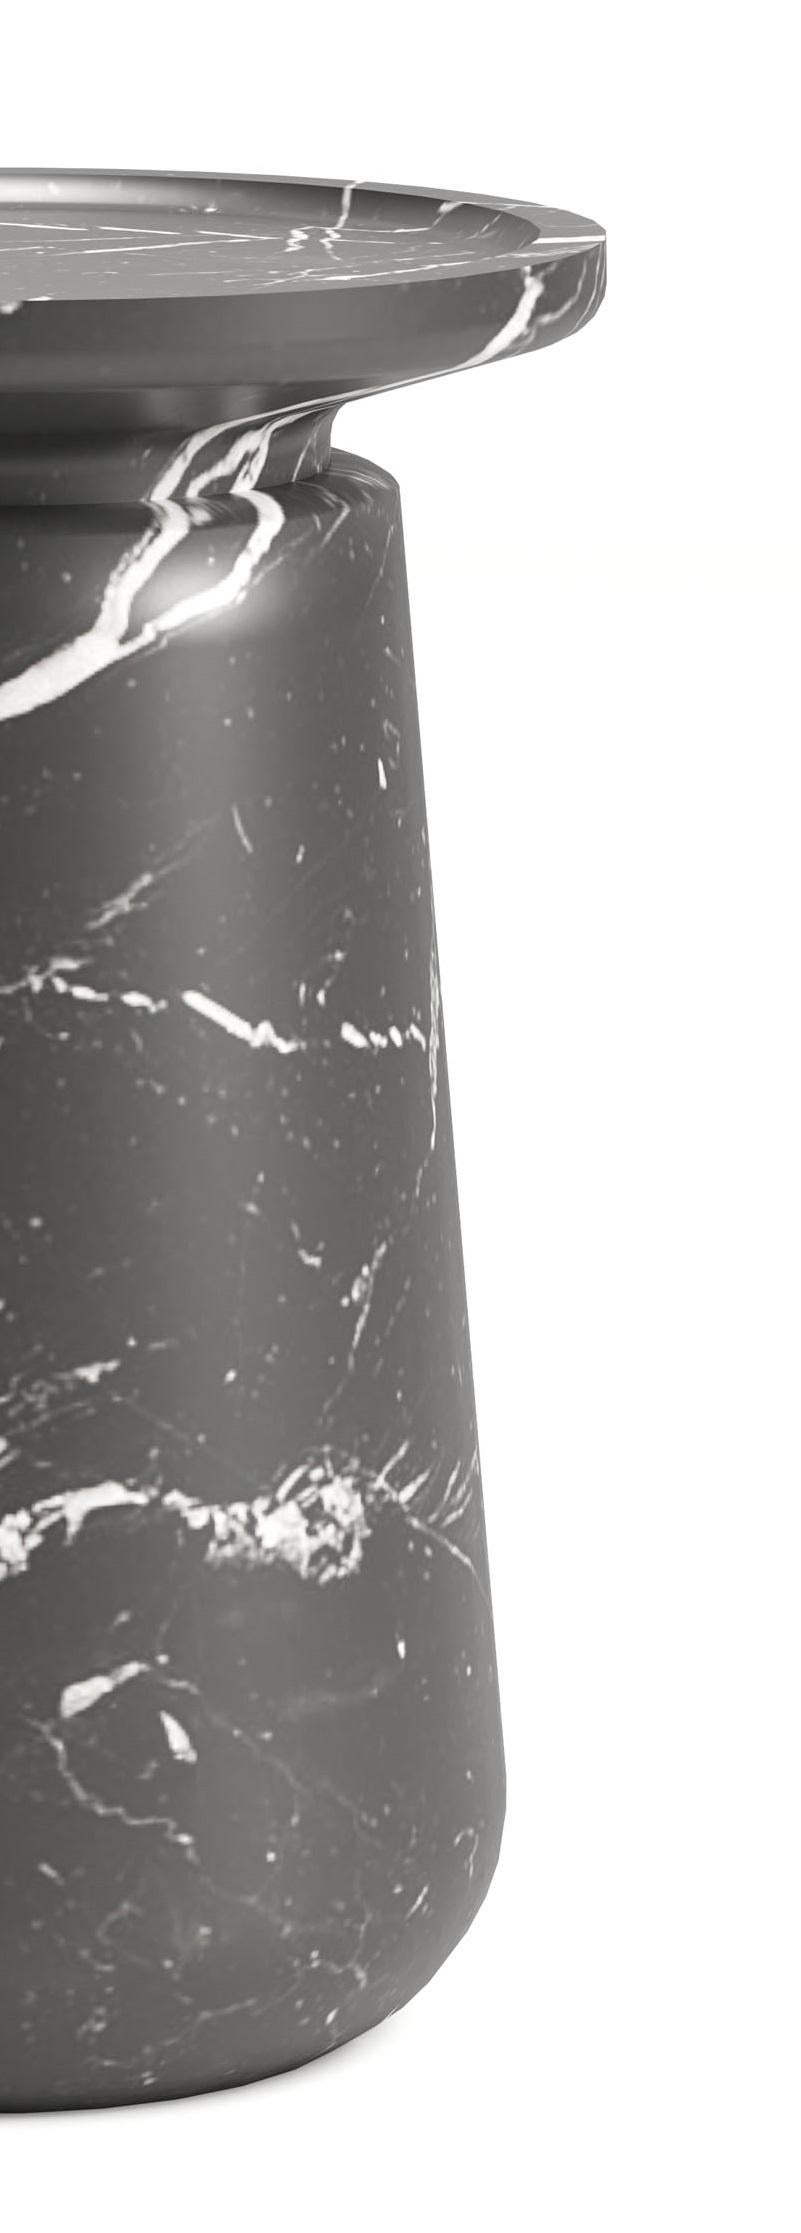 Altana Petite table d'appoint Nero Marquinia par Ivan Colominas
Dimensions : Ø 38 x H 54 cm
Matériaux : Marbre Nero Marquinia.

Disponible en différentes options de marbre et en différentes tailles. Veuillez nous contacter.

À l'instar des terrasses